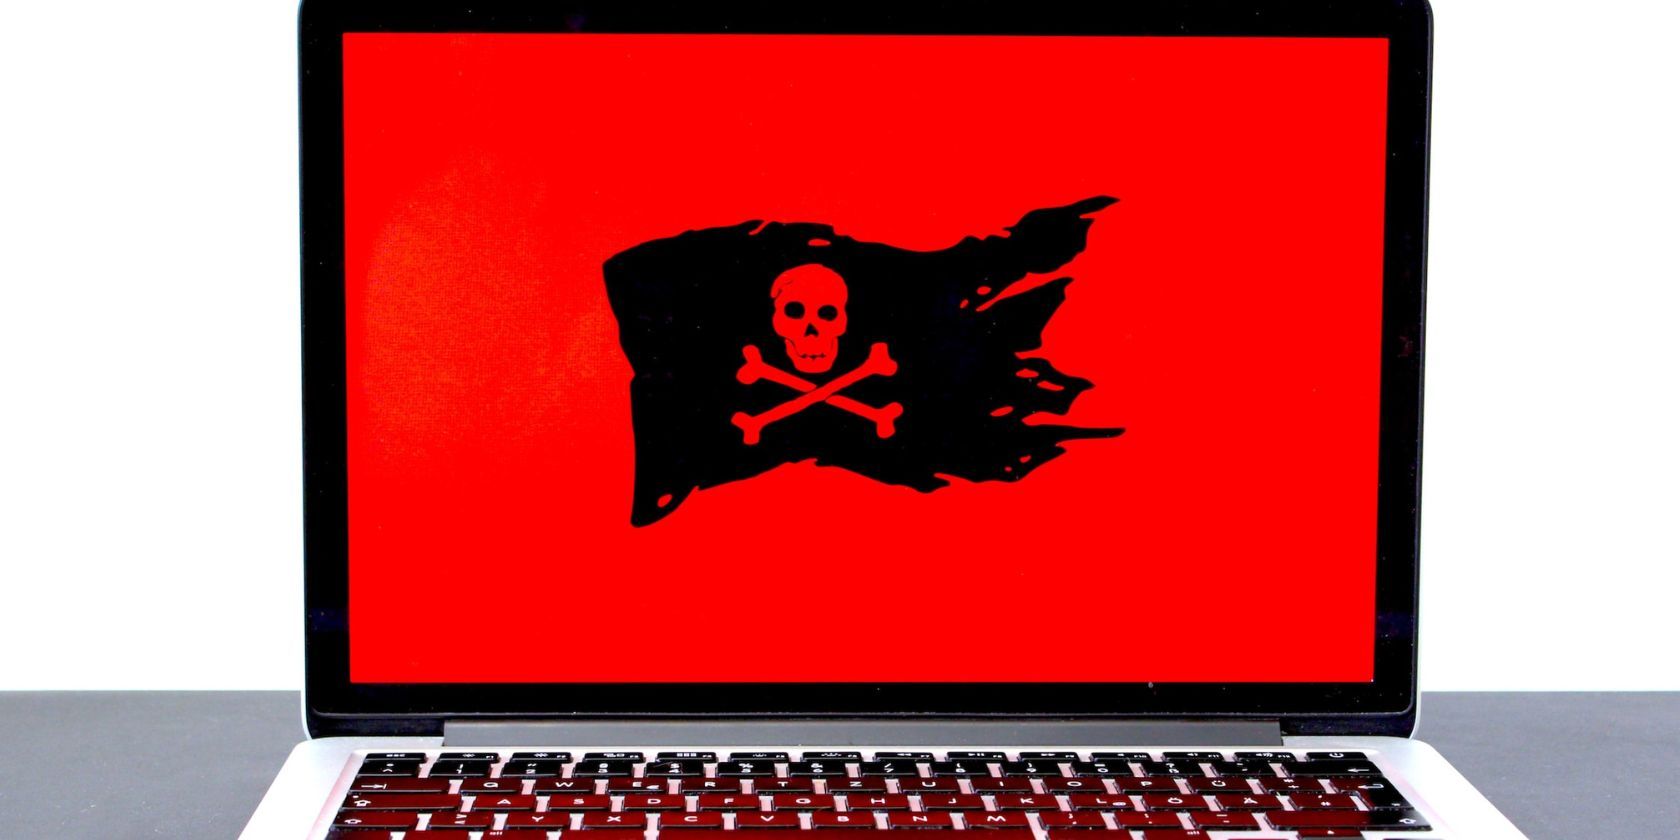 skull flag on red background on laptop screen